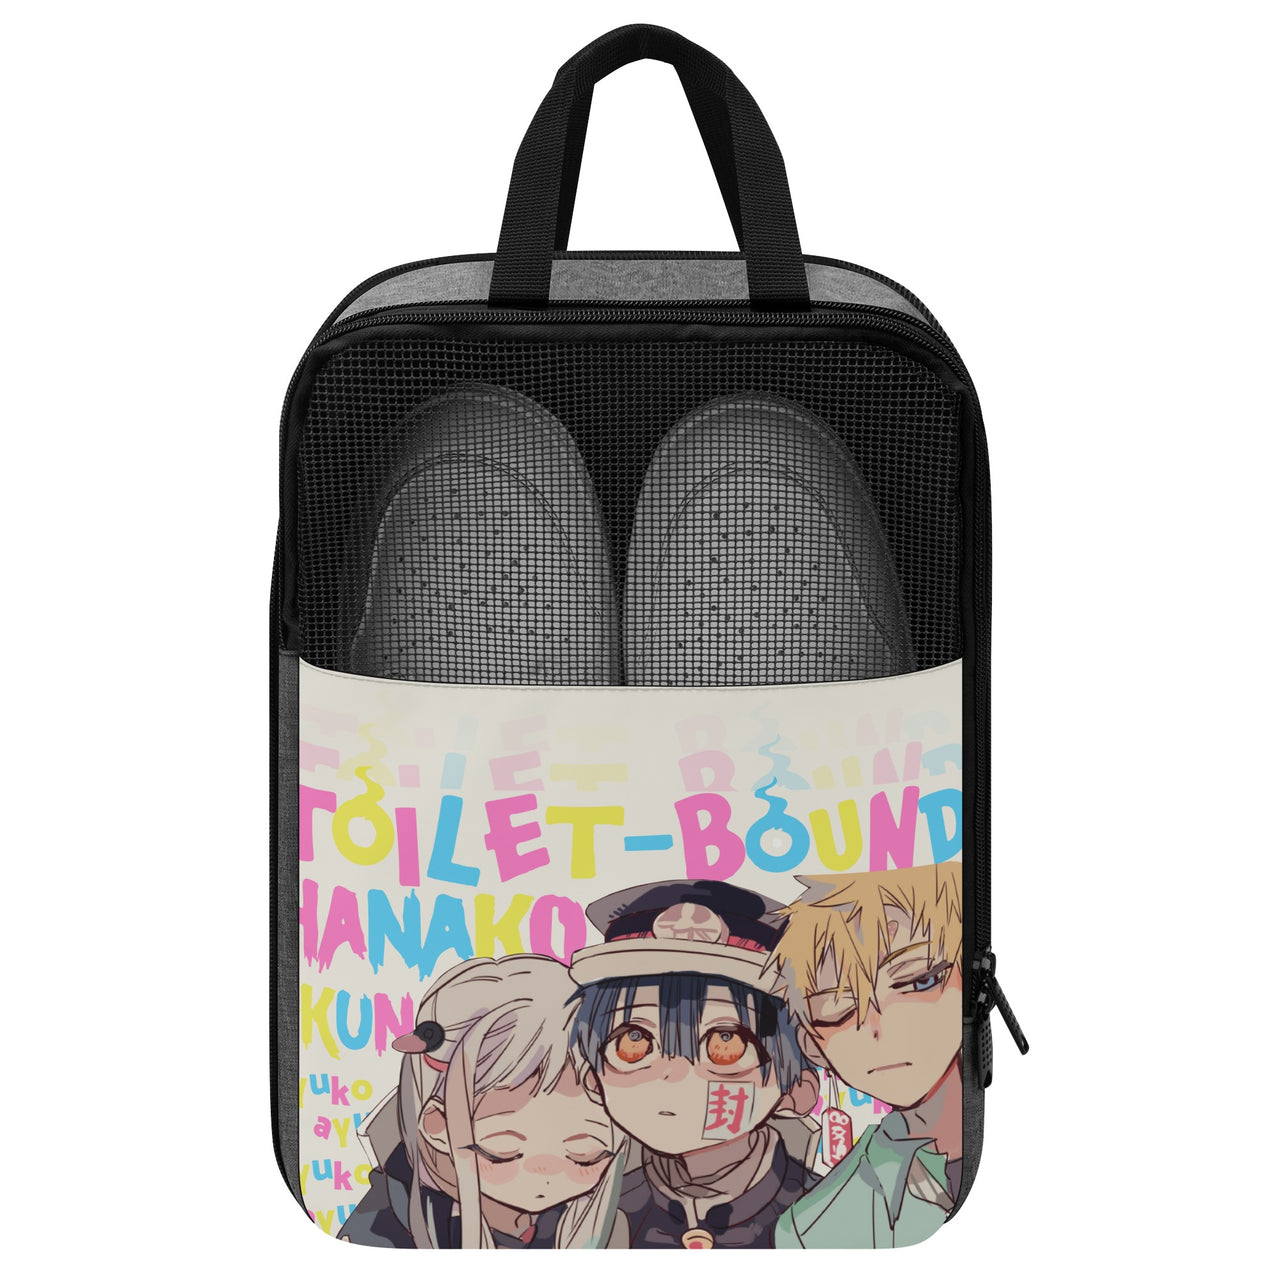 Toilet-Bound Hanako-kun Anime Shoe Bag